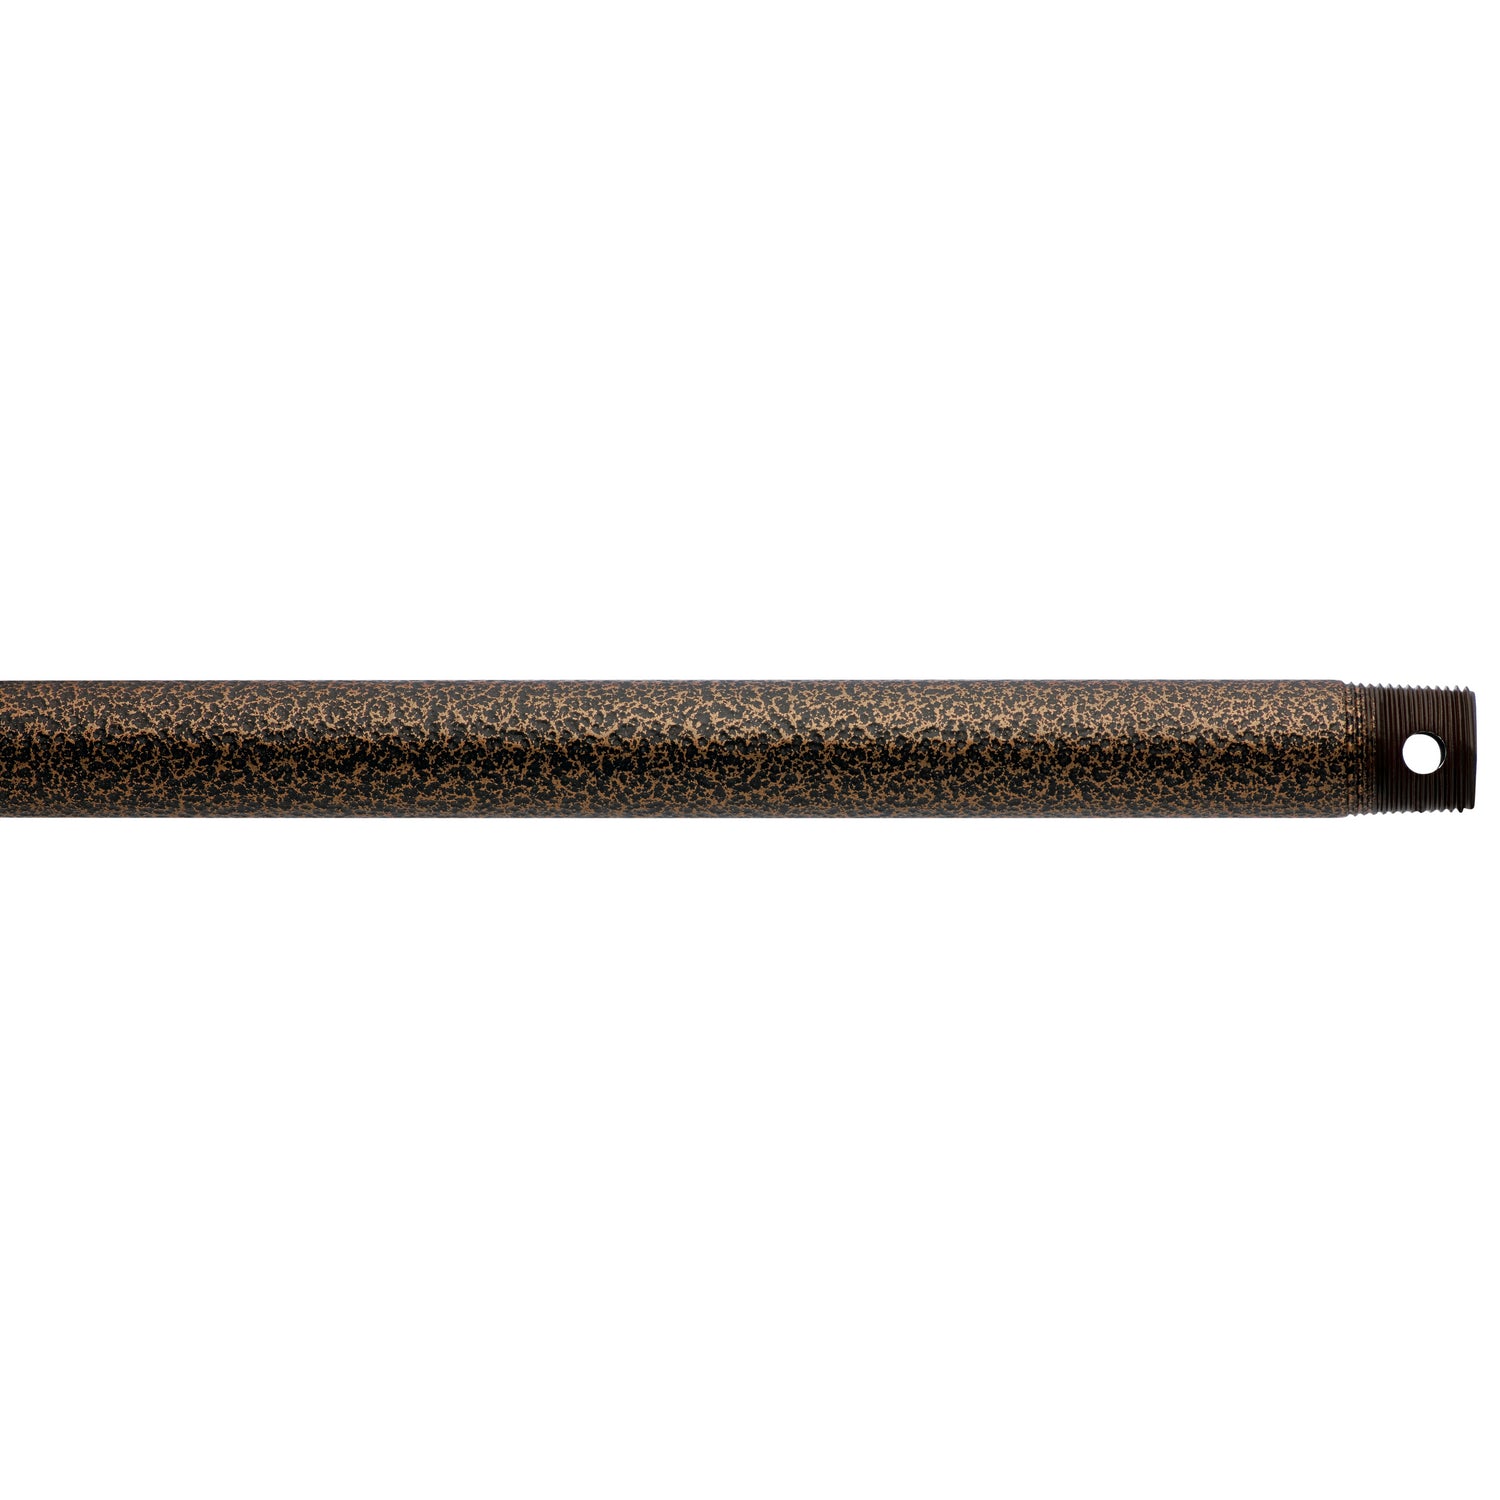 Kichler Canada - Fan Down Rod 72 Inch - Accessory - Weathered Copper Powder Coat- Union Lighting Luminaires Decor